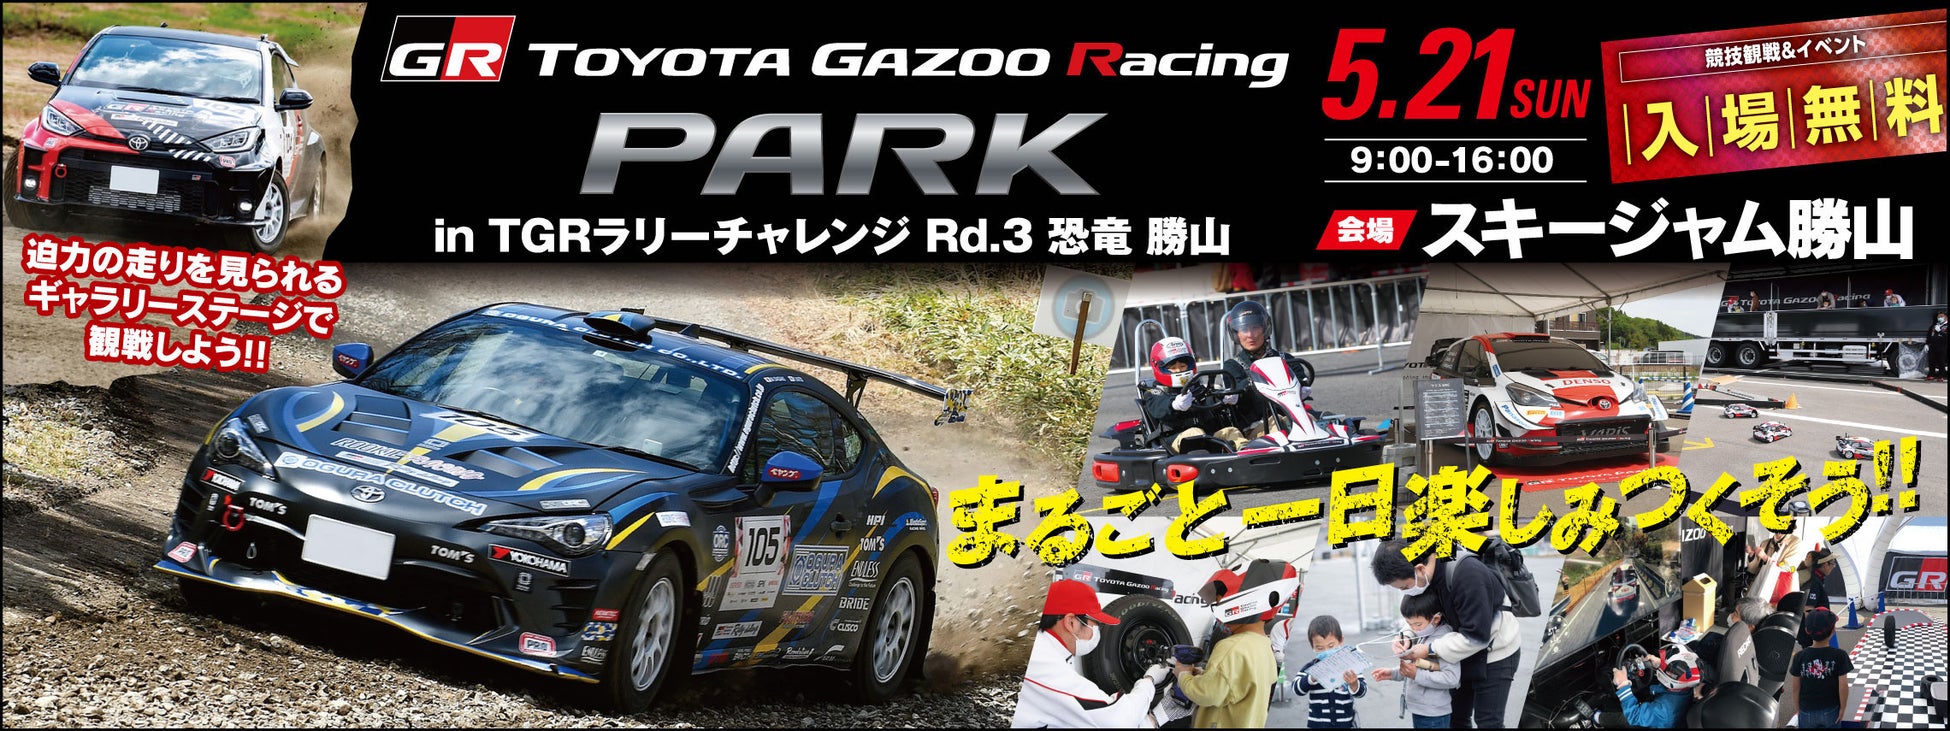 TOYOTA GAZOO Racing PARK in TGRラリーチャレンジ Rd.3 恐竜 勝山 開催